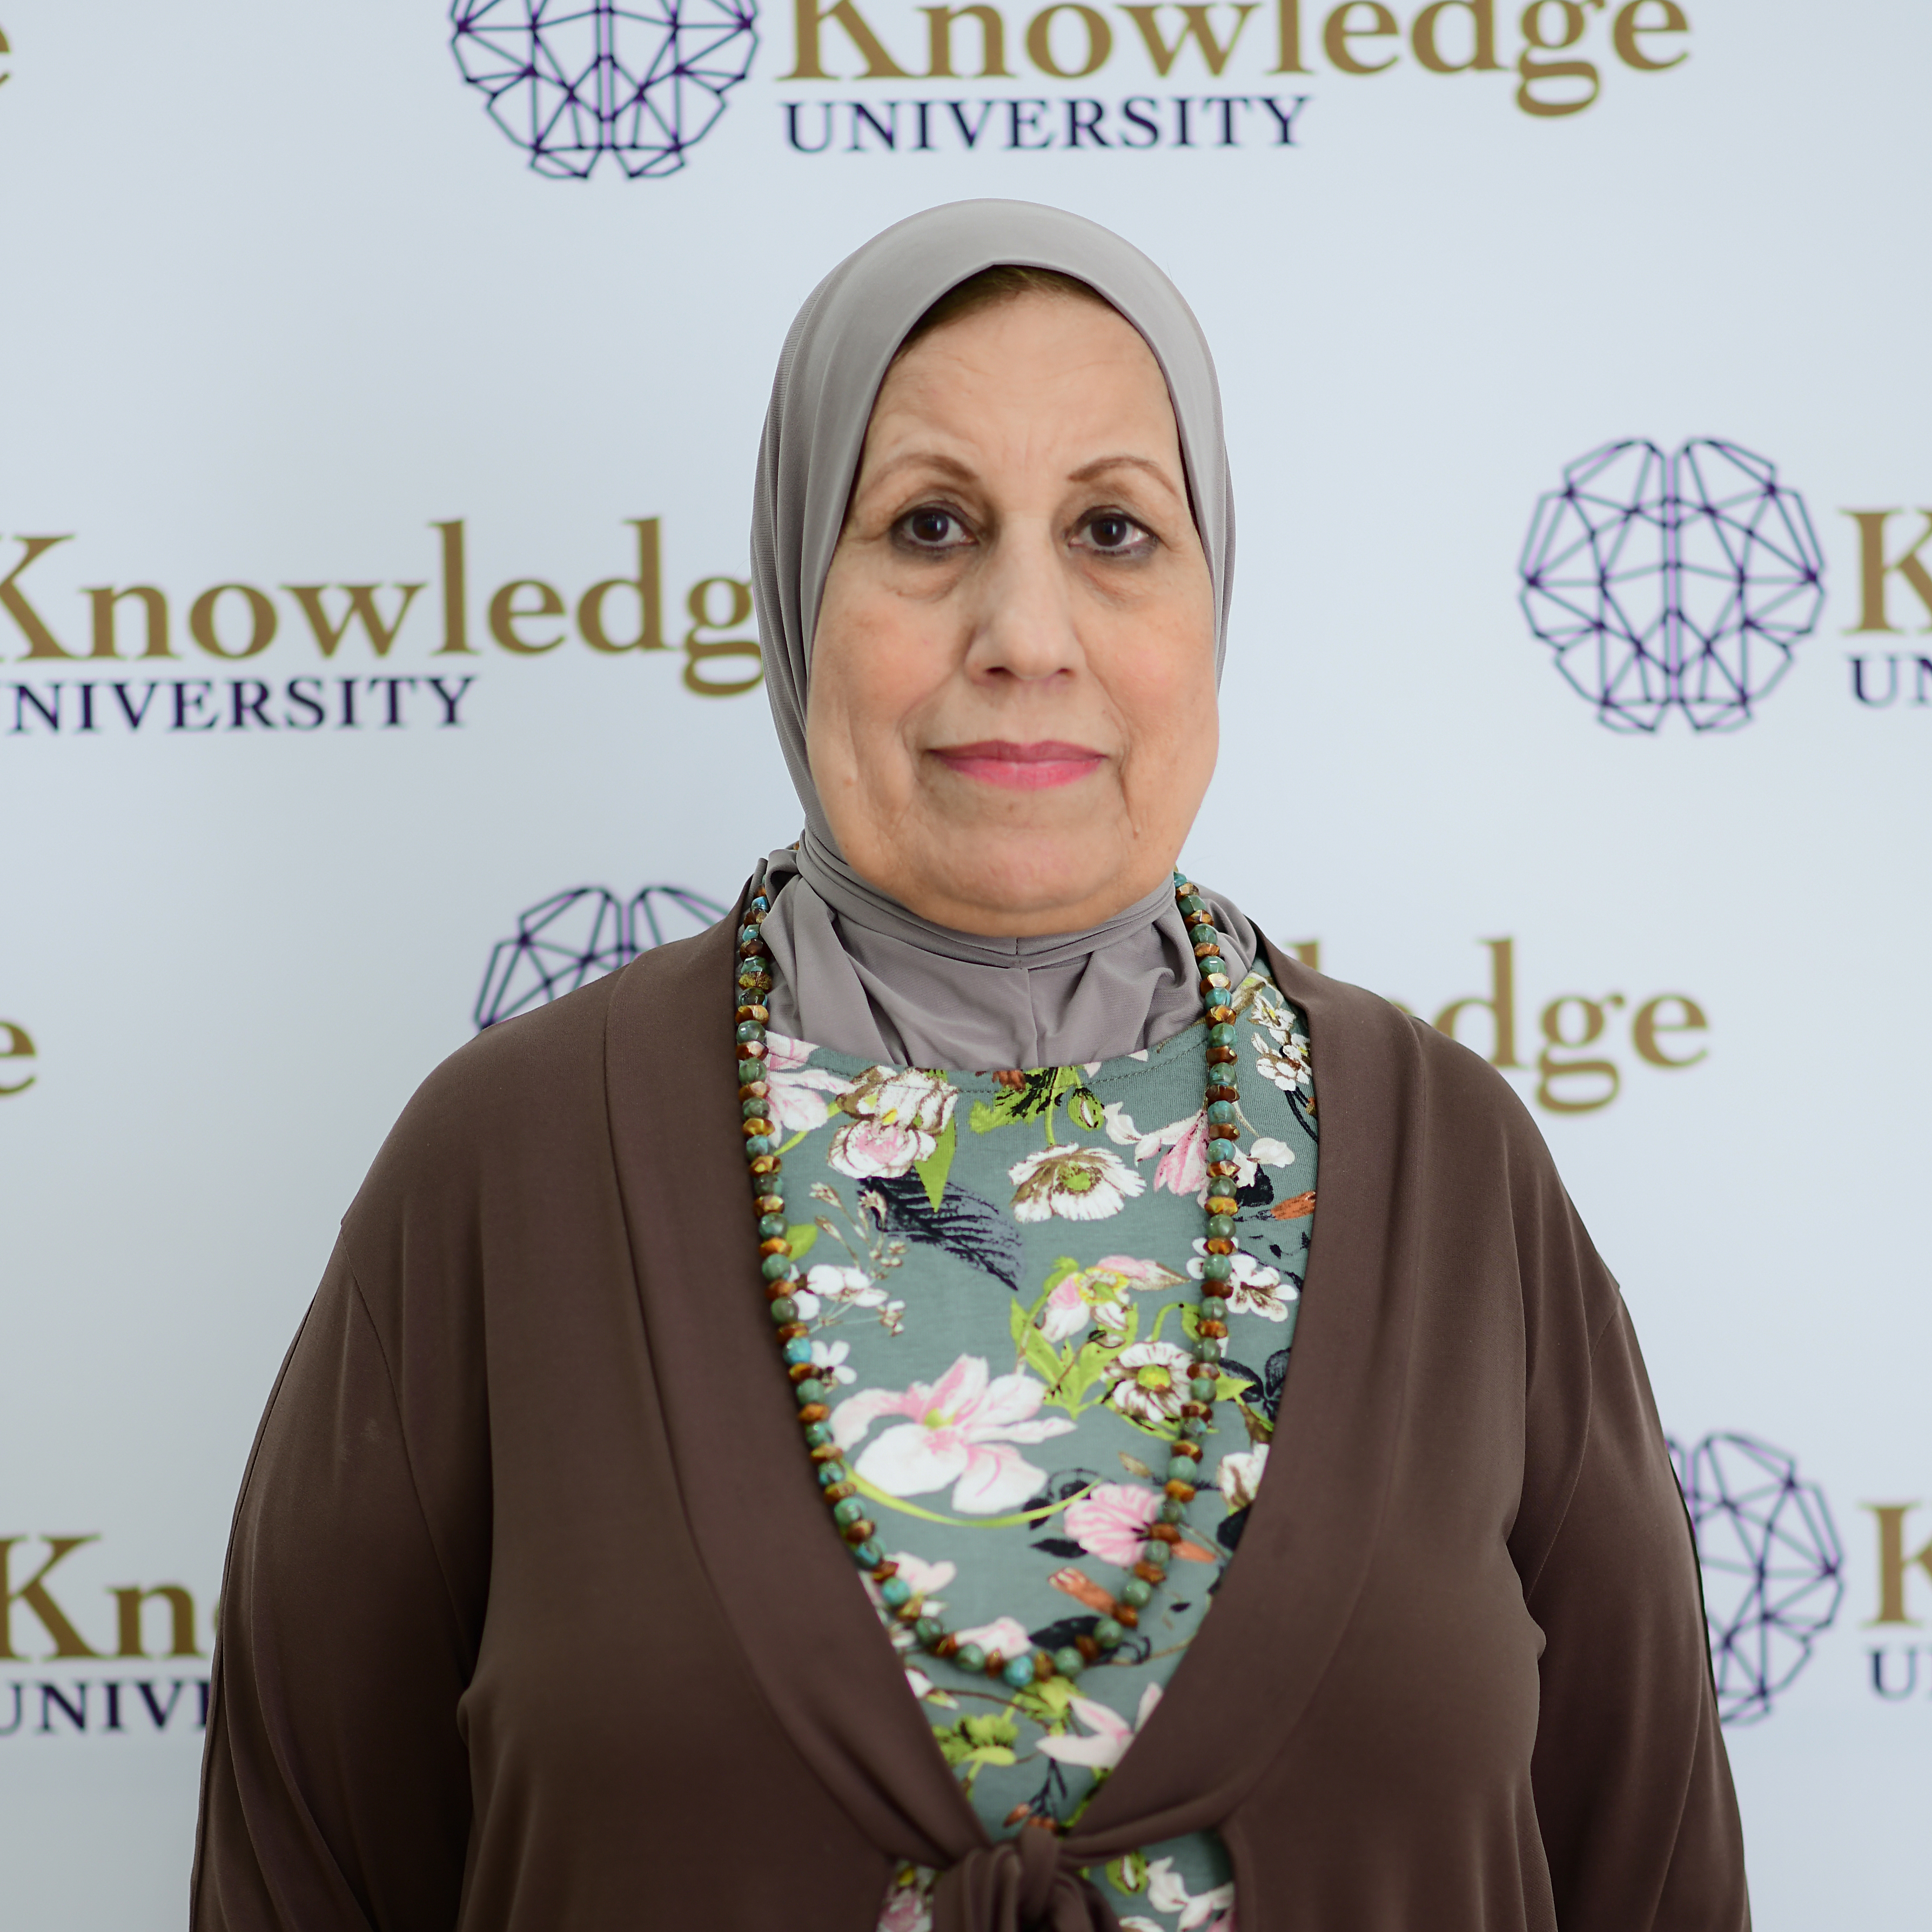 Iqbal Hassan Al-khateeb, Knowledge University Lecturer